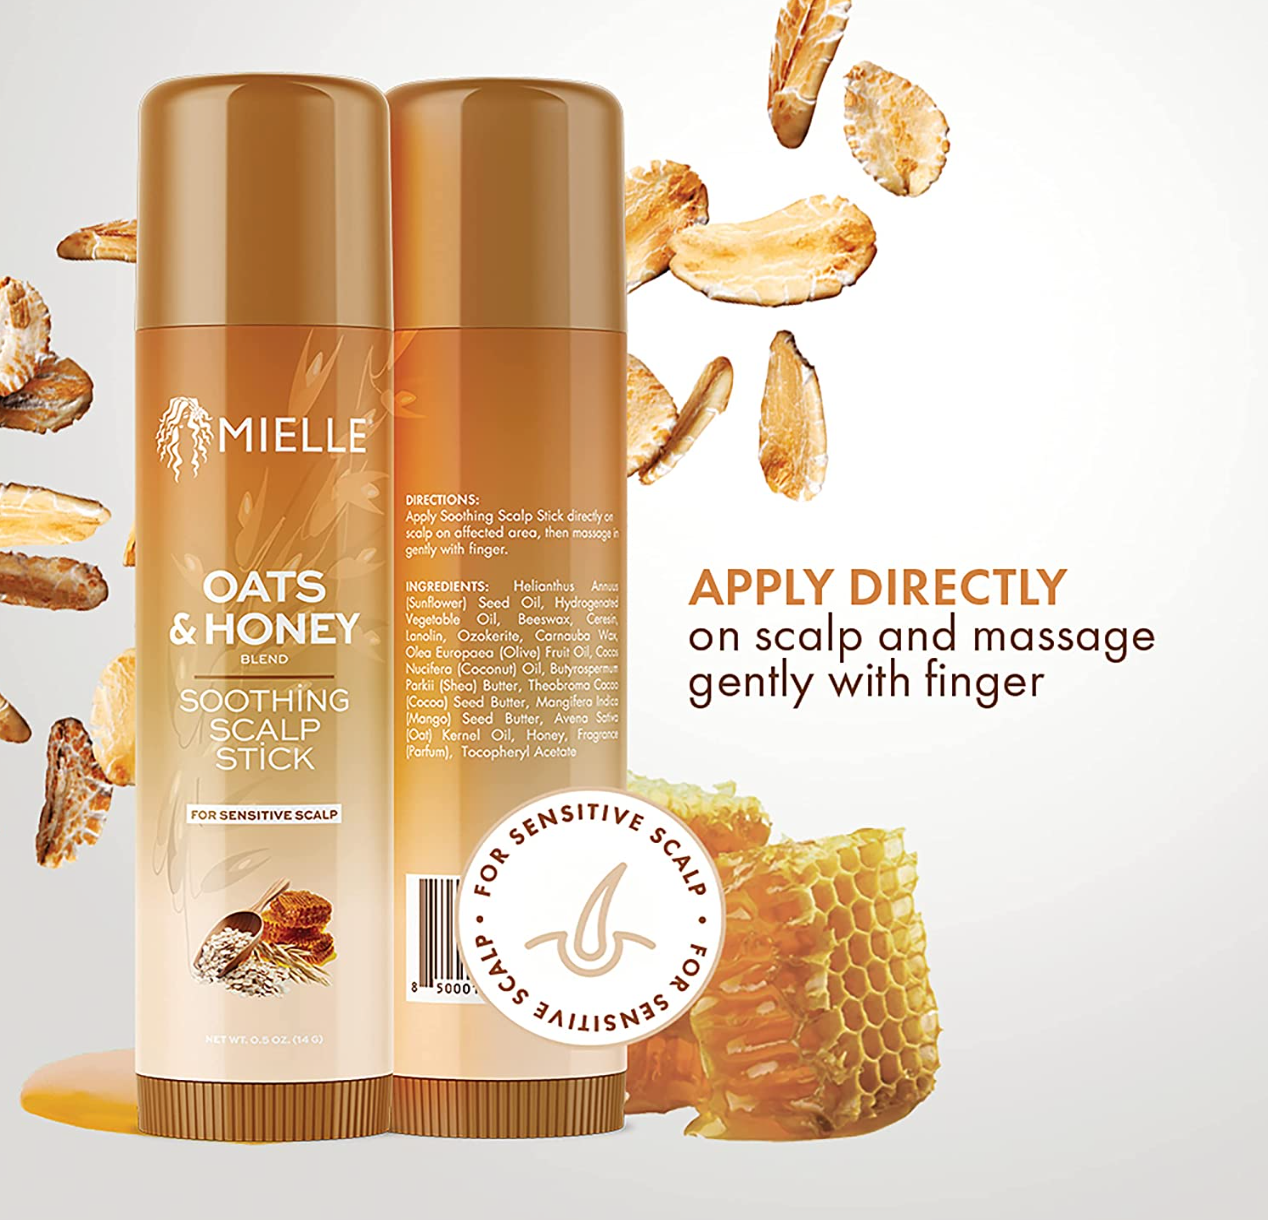 Mielle Organics Oats & Honey Soothing Scalp Stick